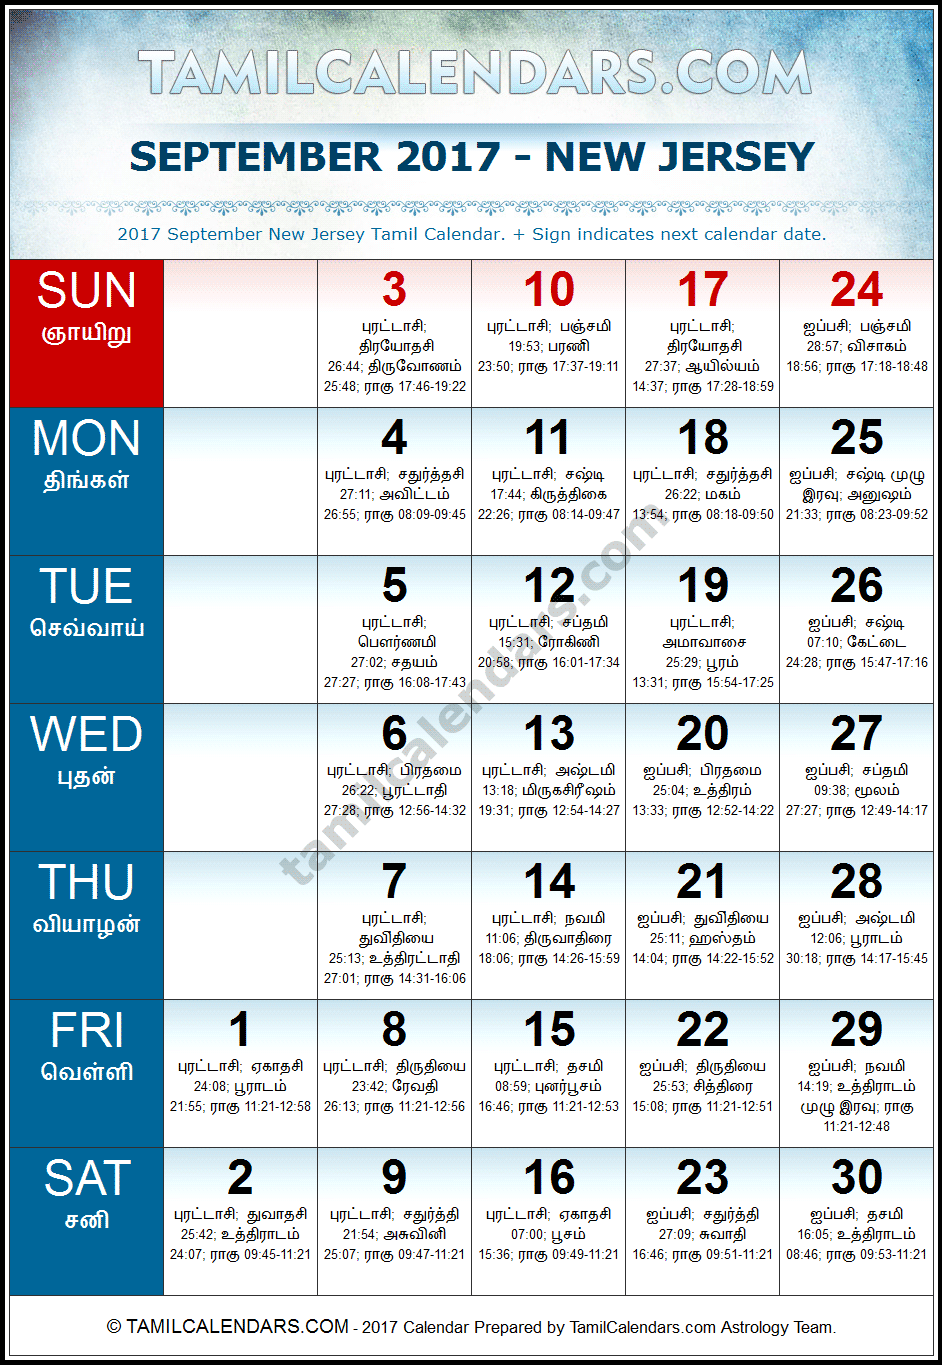 September 2017 Tamil Calendar for New Jersey, USA